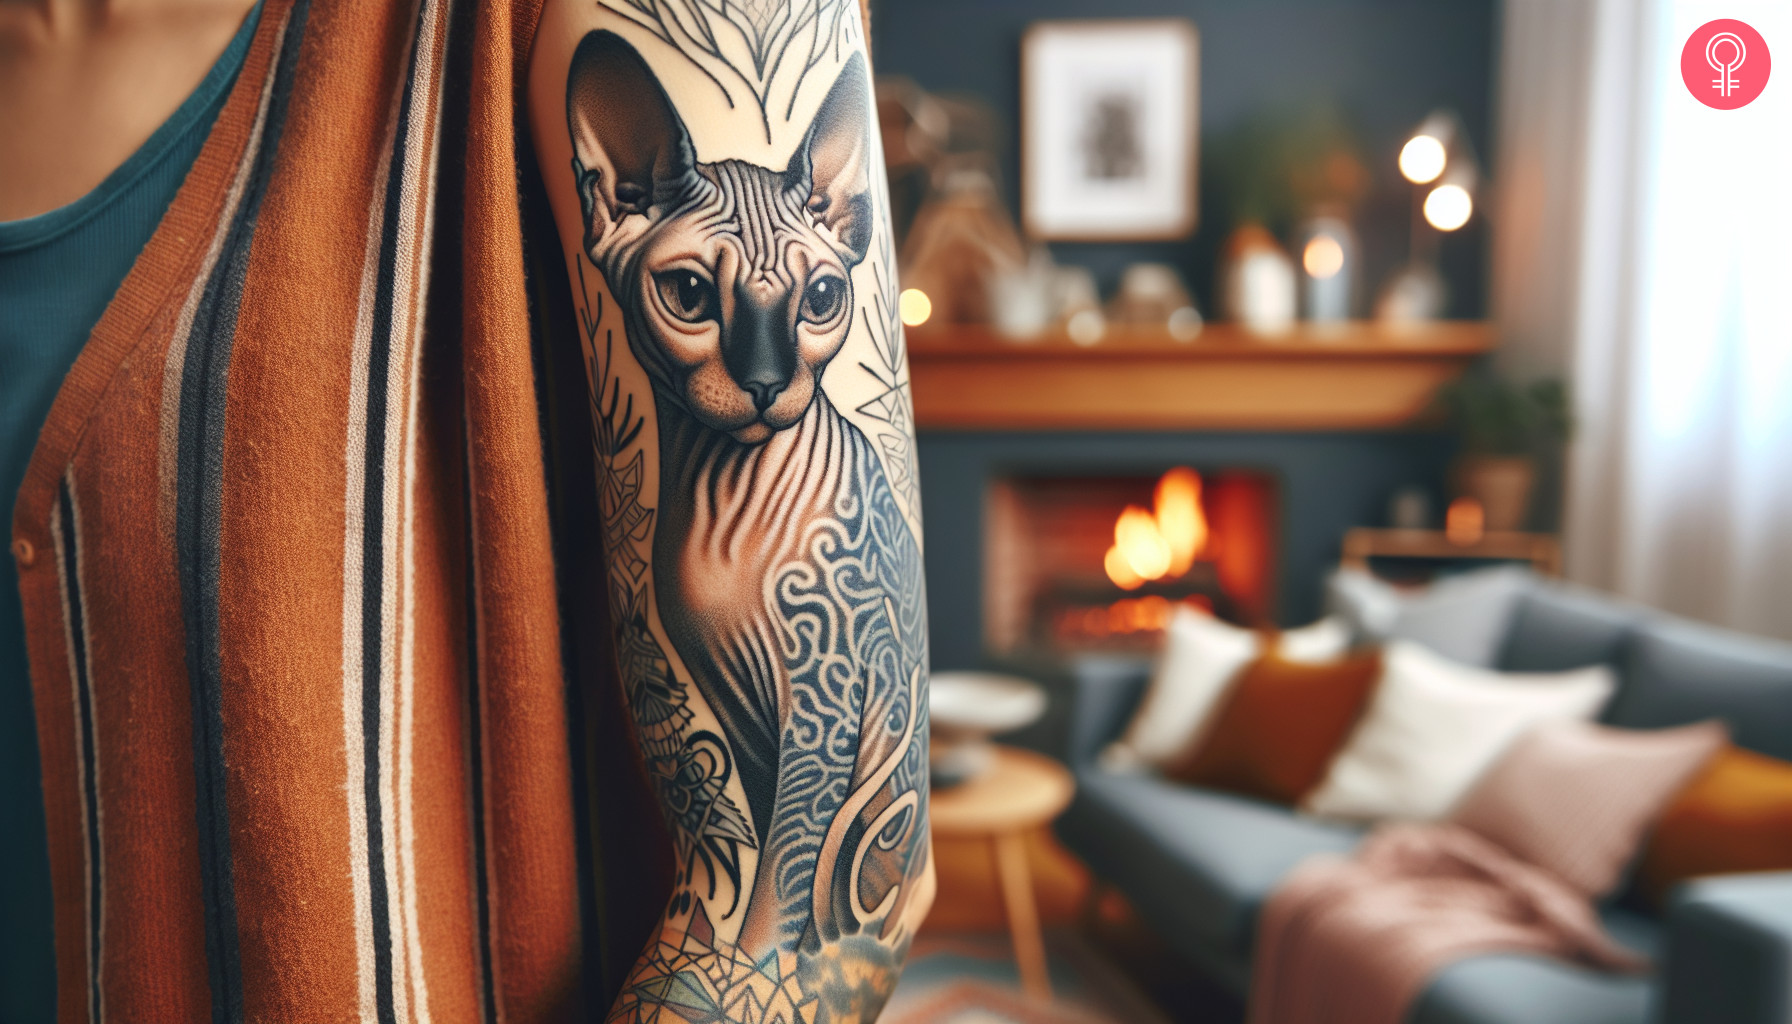 Sphynx cat tattoo on the sleeve